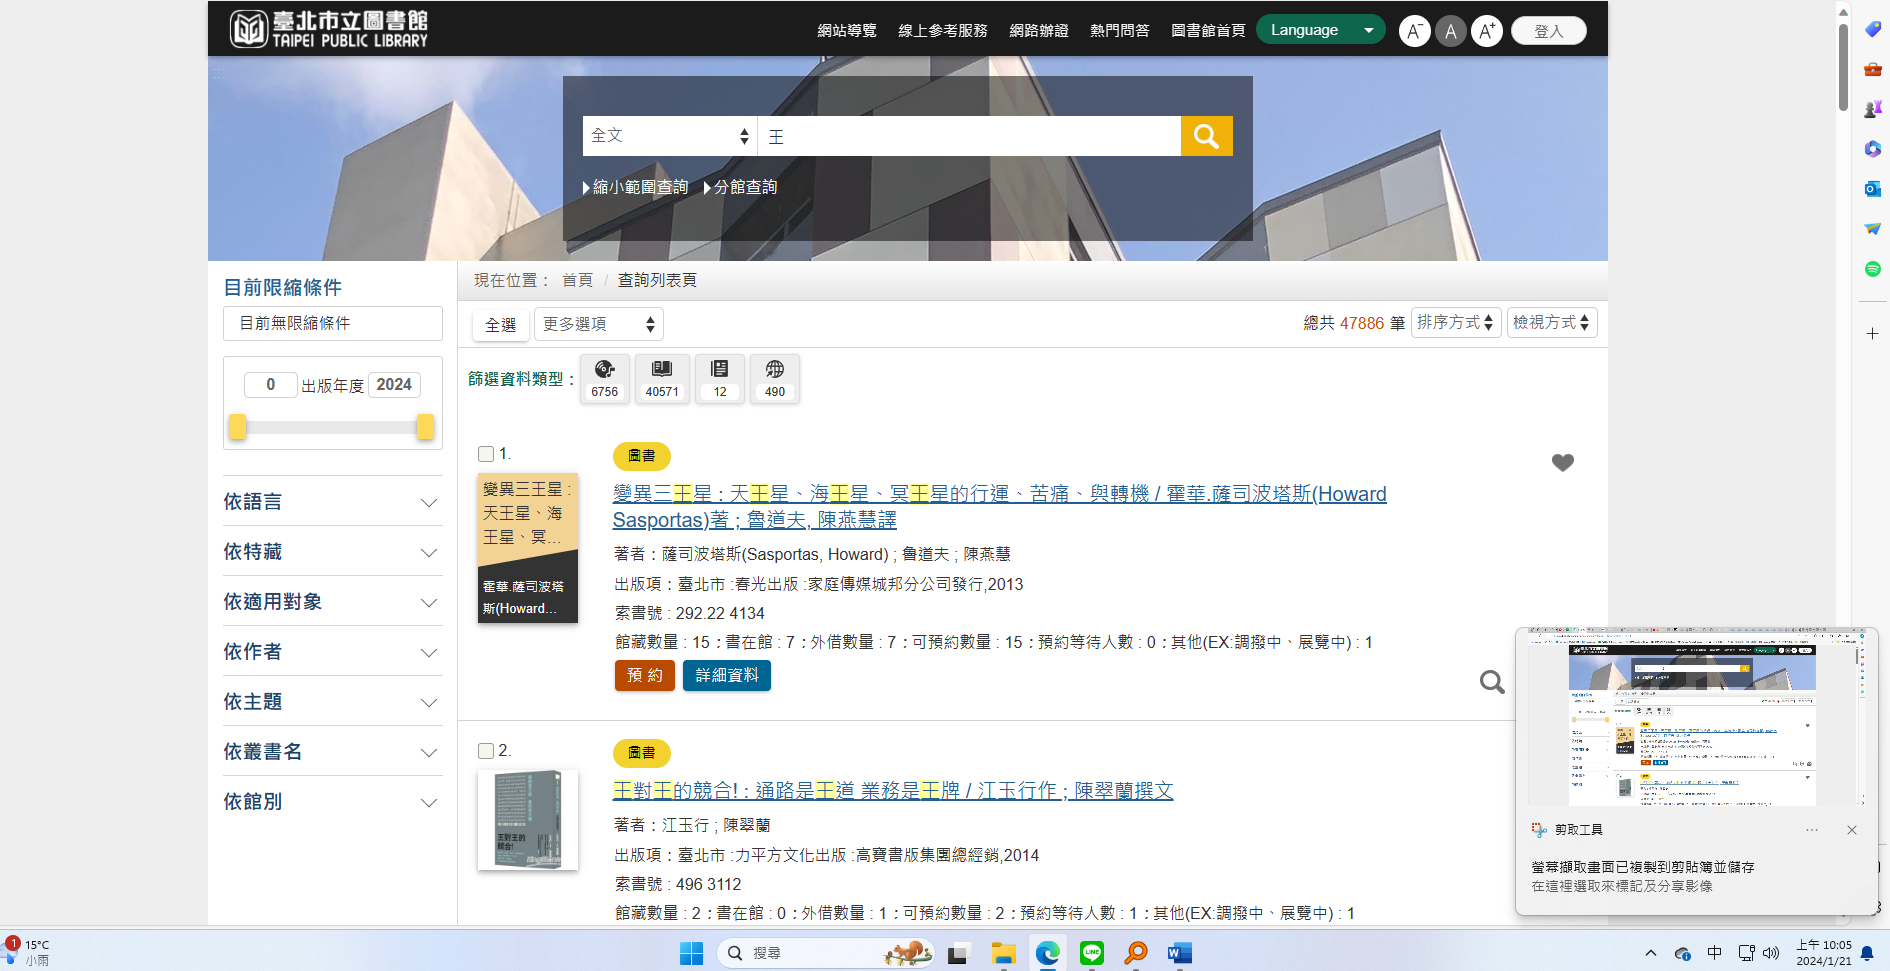 Re: [問卦] 台北市立圖書館app, 網頁同時掛了？